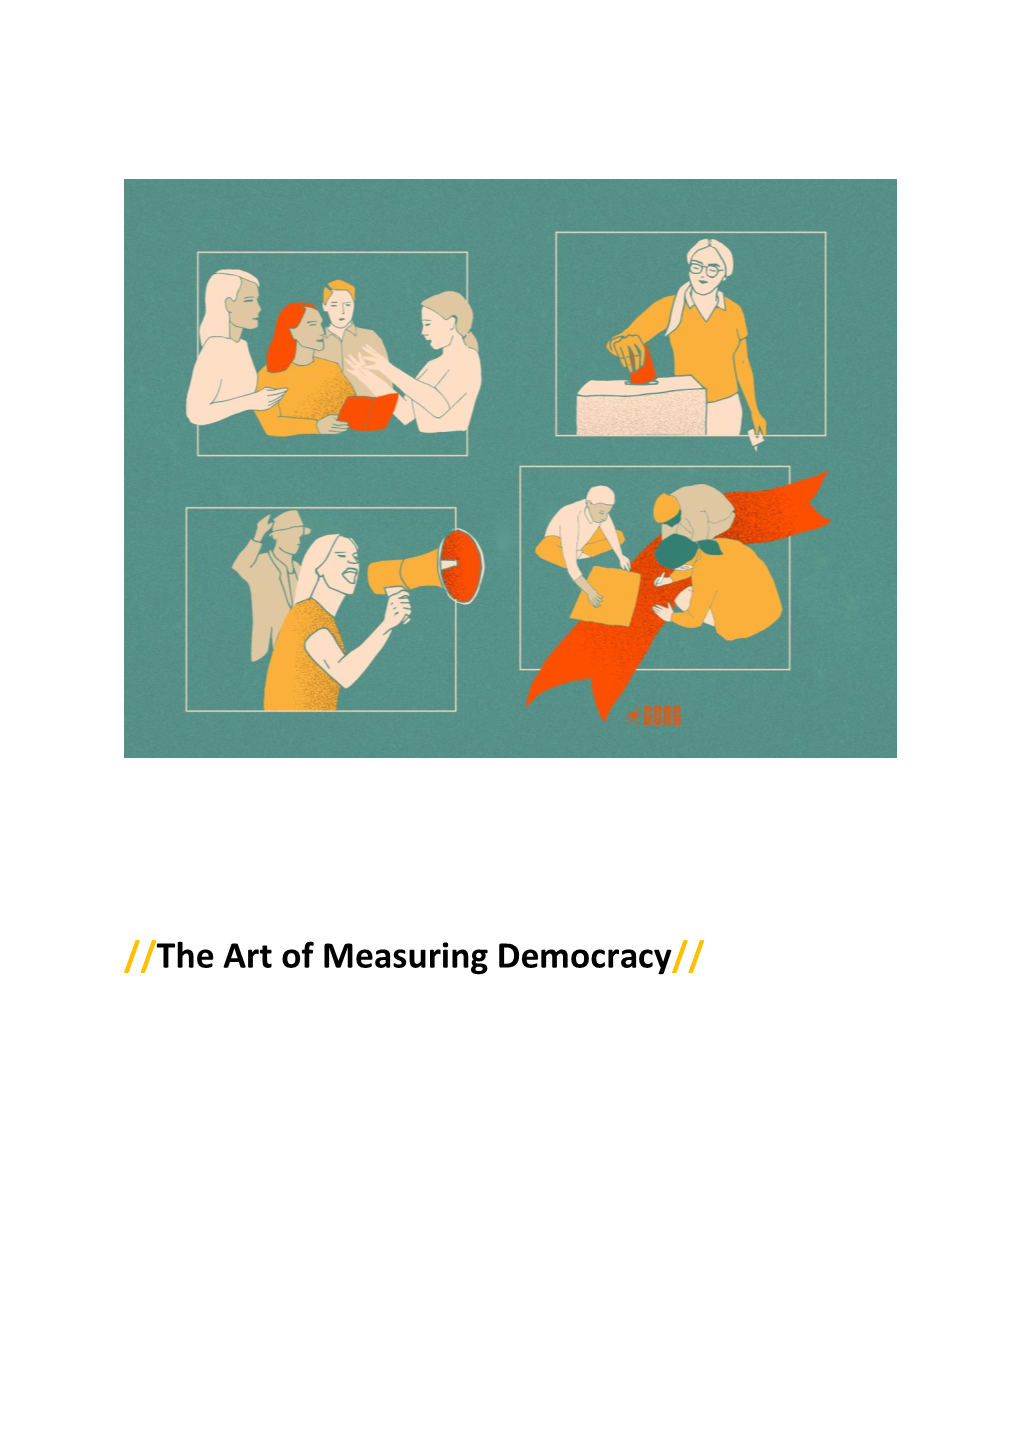 The Art of Measuring Democracy